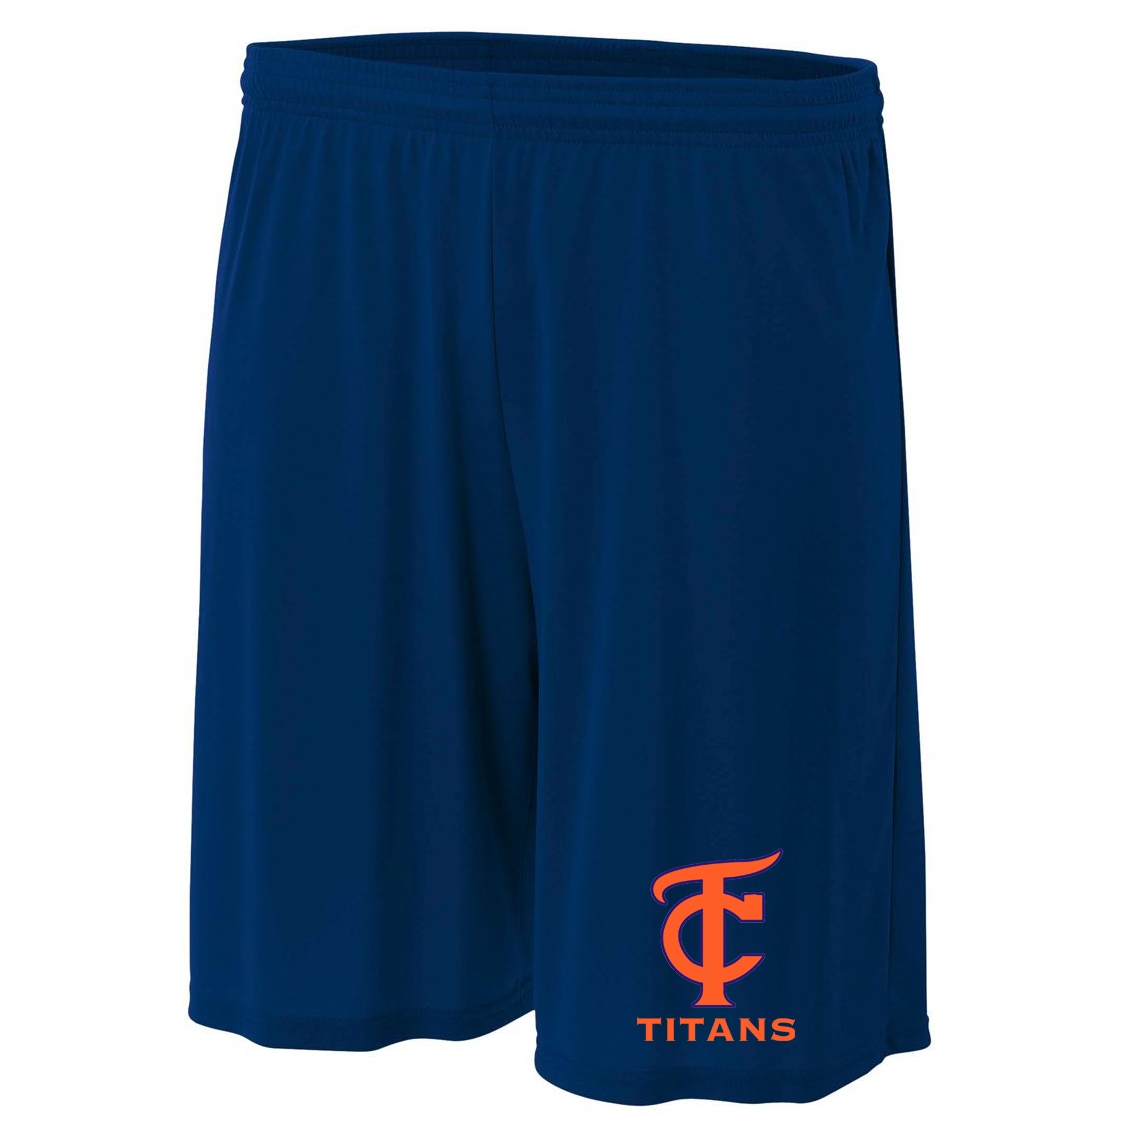 Titans Lacrosse Cooling 7" Performance Shorts